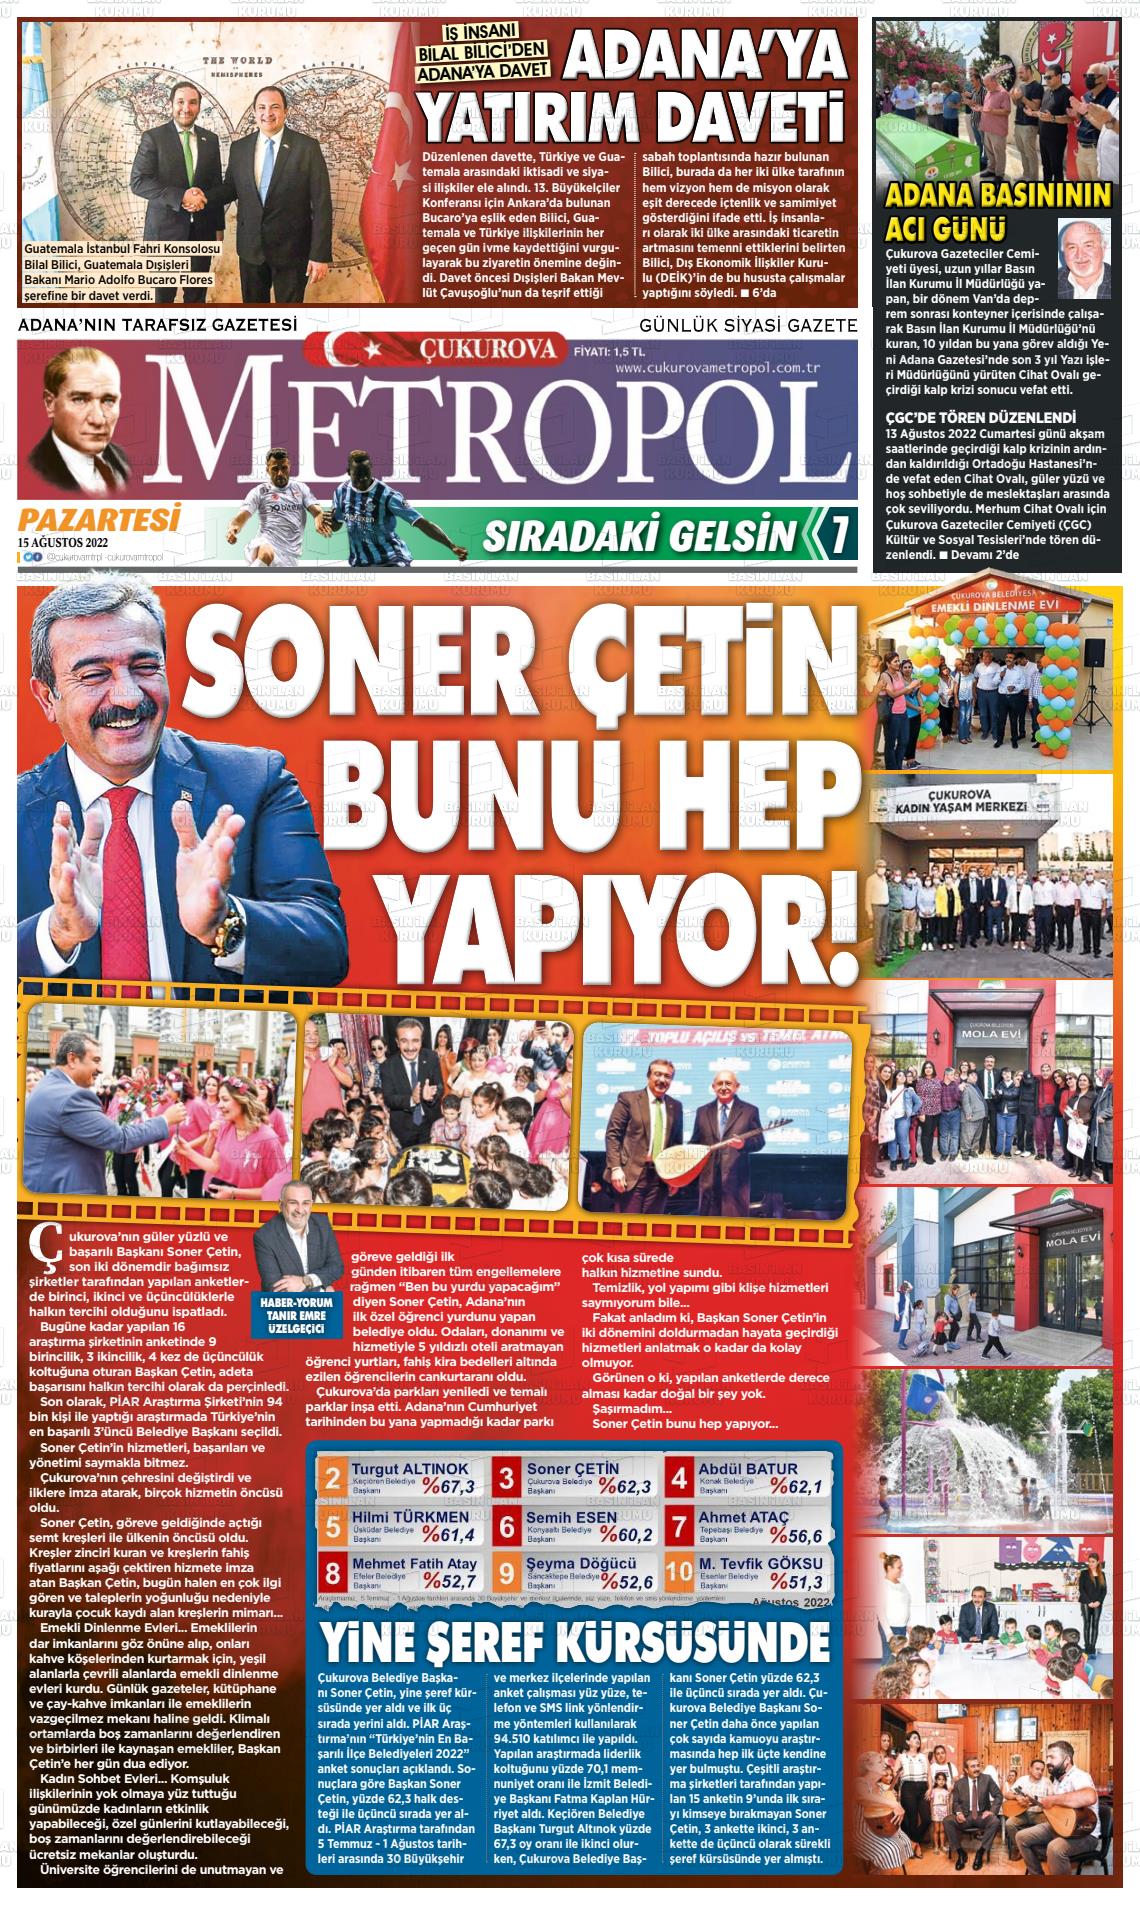 15 Ağustos 2022 Çukurova Metropol Gazete Manşeti